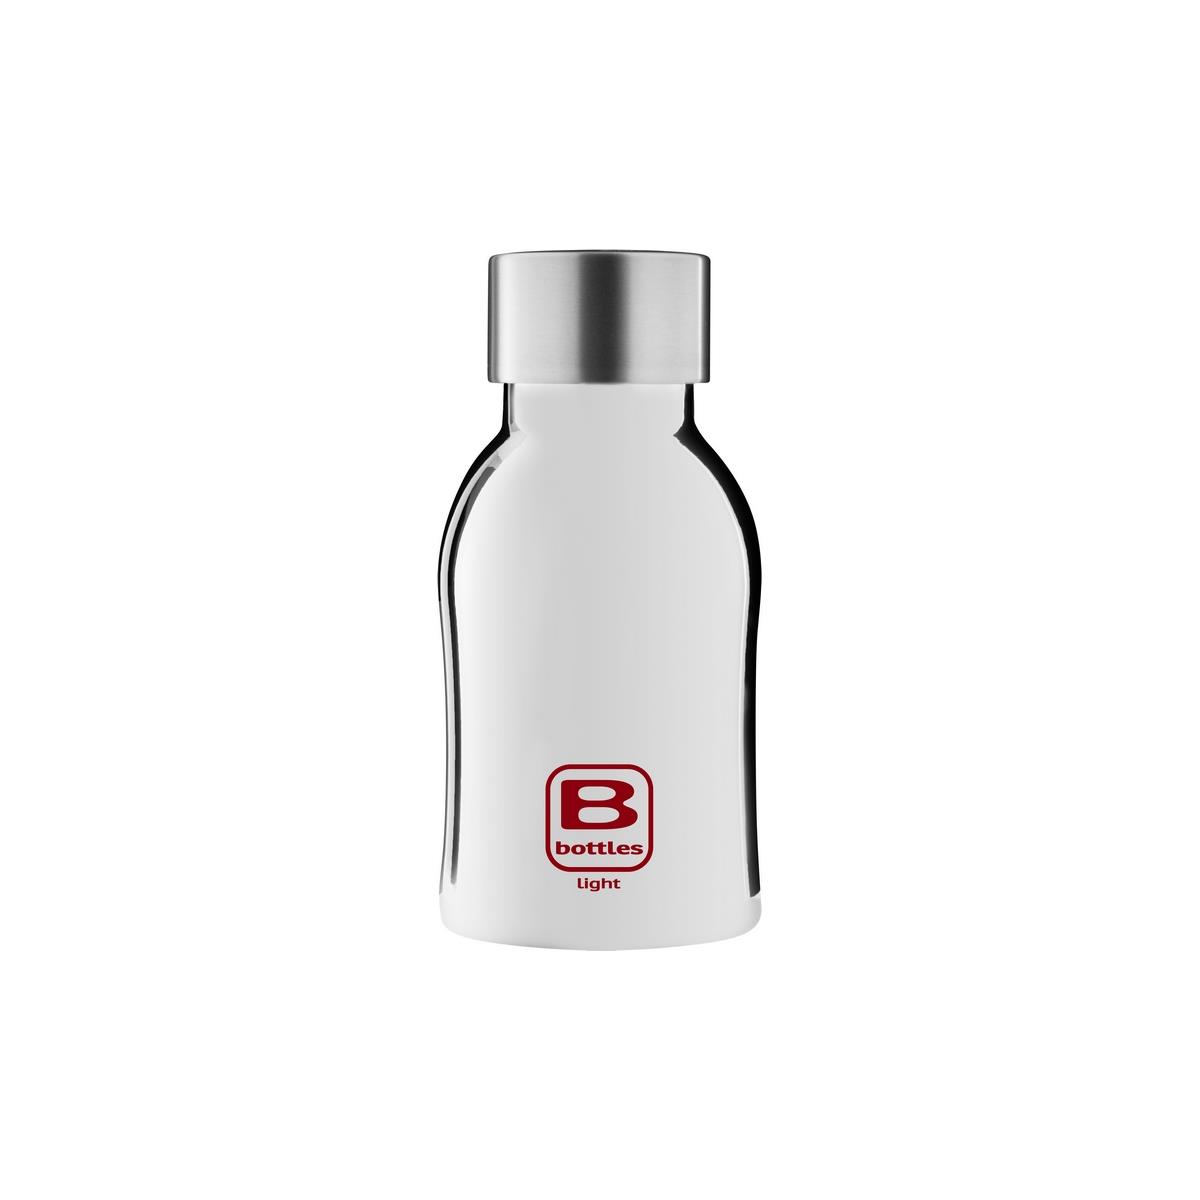 B Bottles Light - Silver Lux - 350 ml - Garrafa ultraleve e compacta em aço inoxidável 18/10